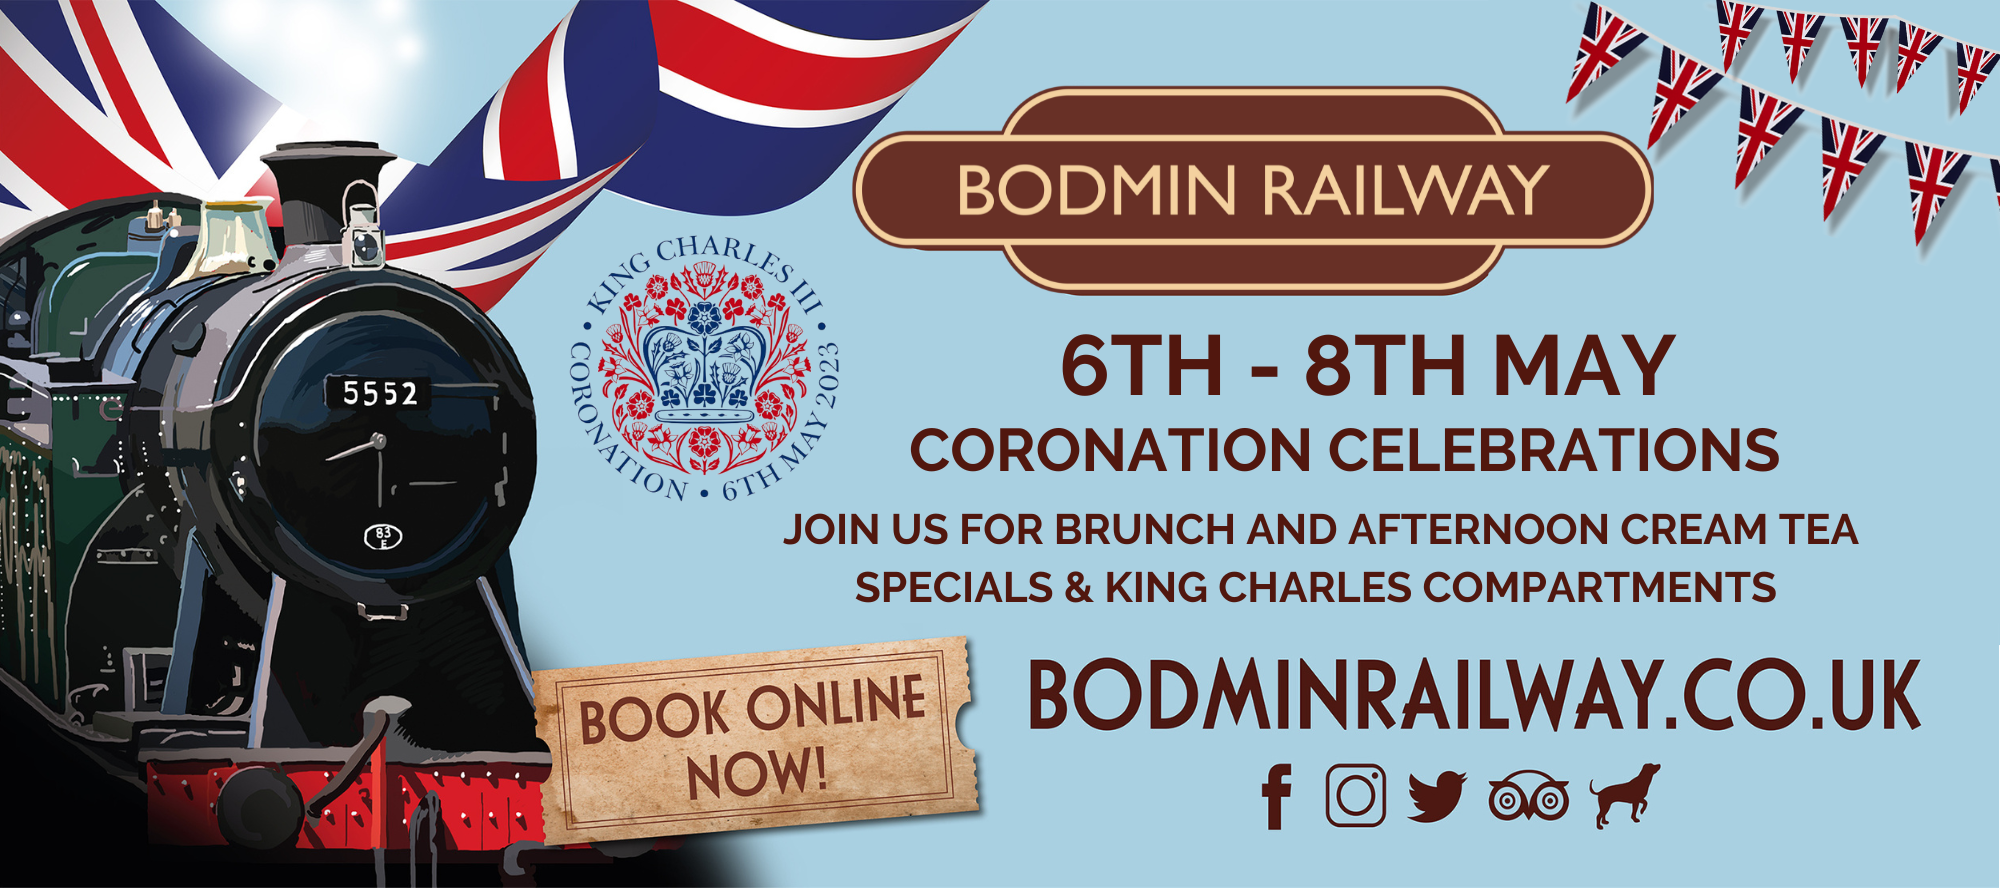 Coronation Celebrations at Bodmin Railway